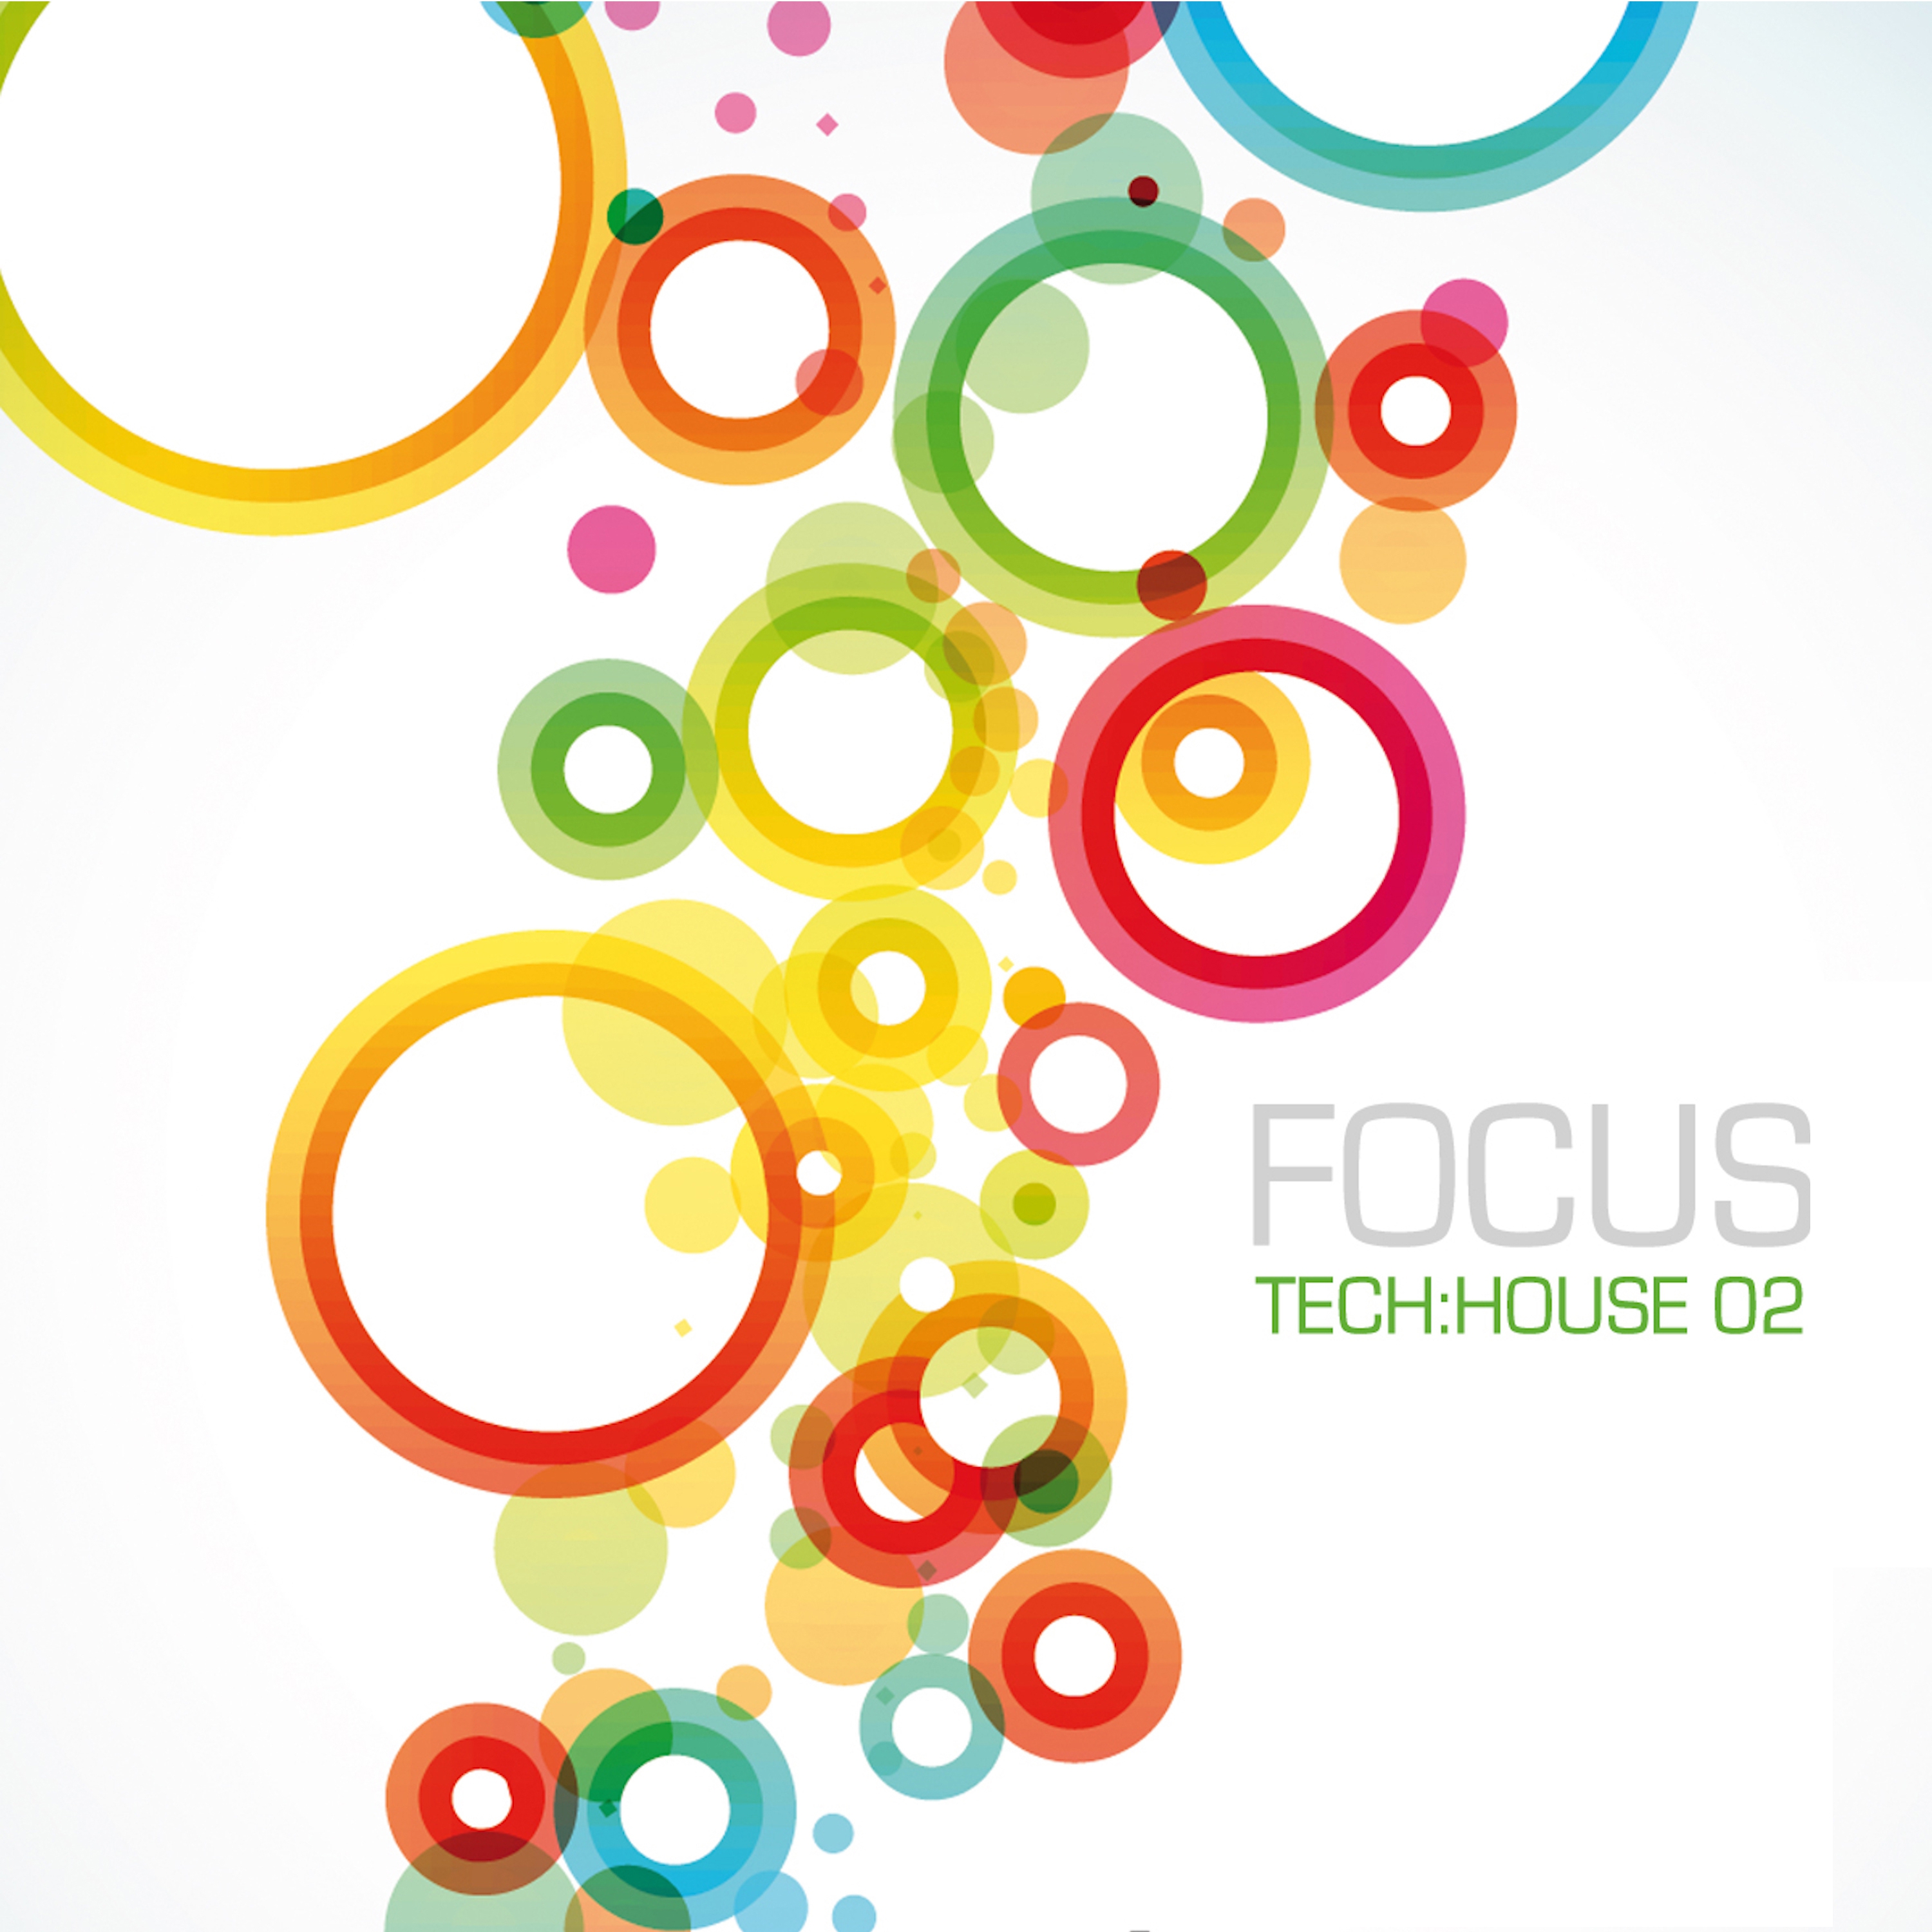 Focus Tech: House 02